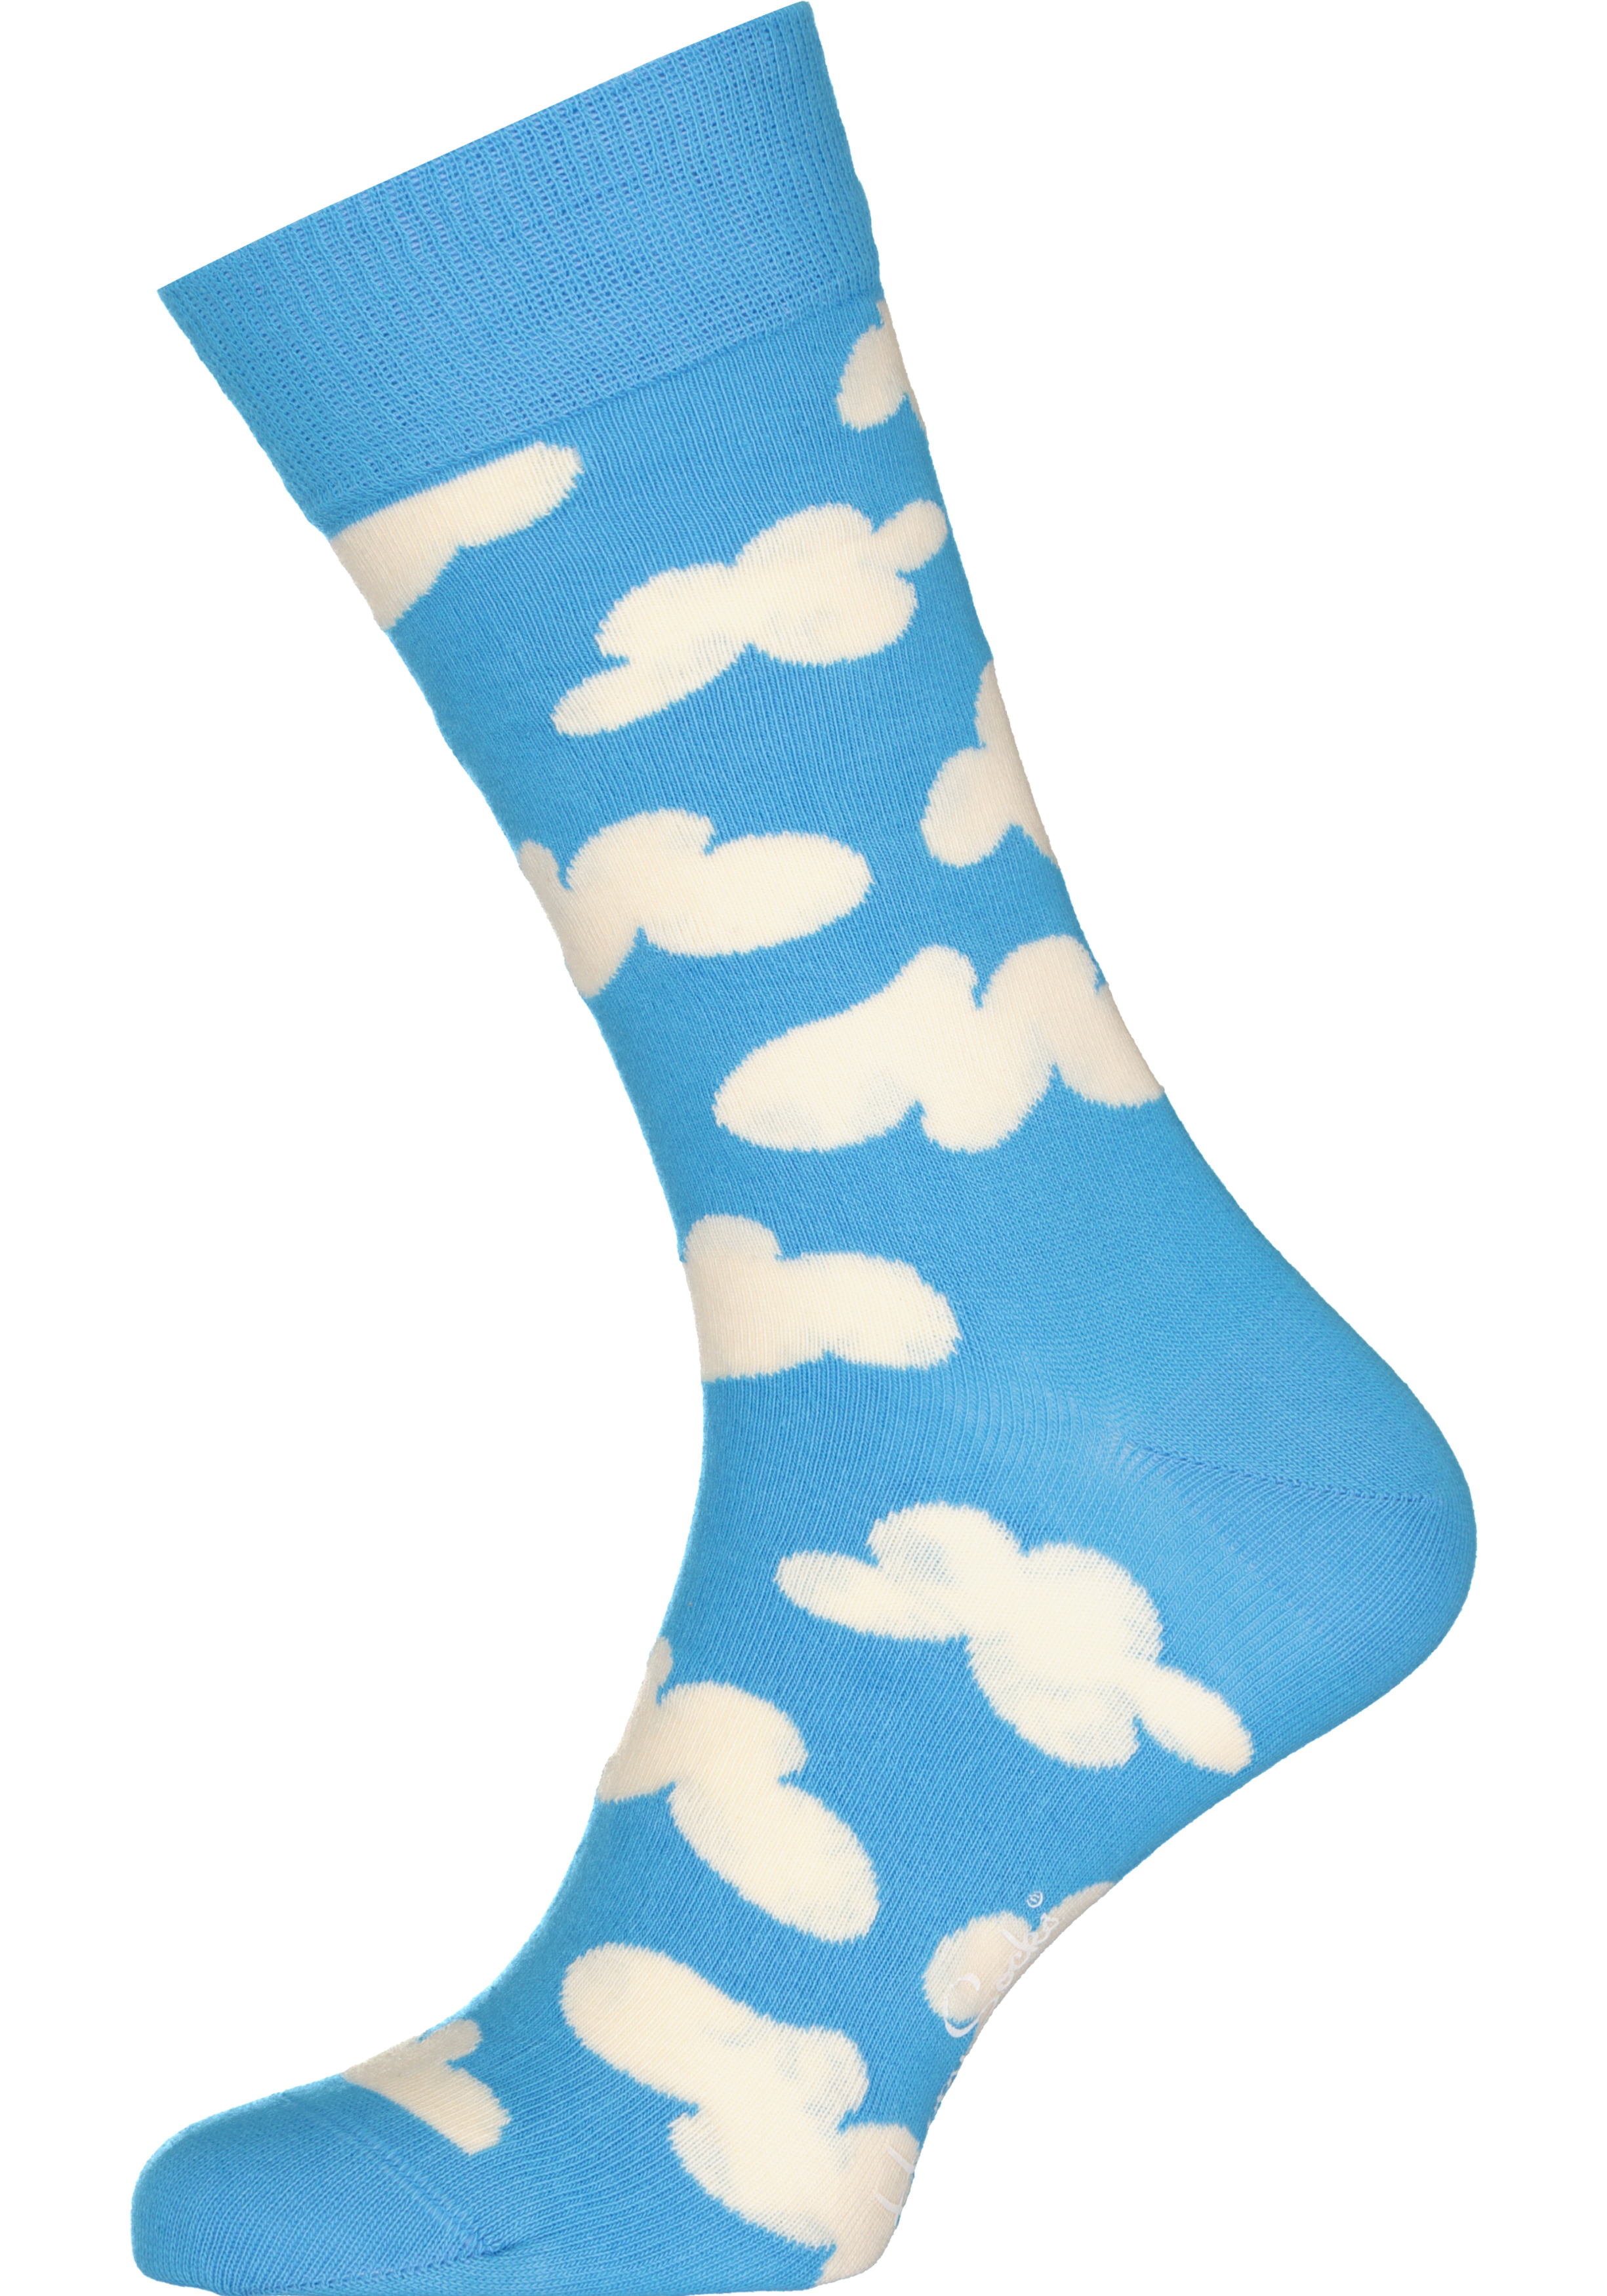 Happy Socks Cloudy Sock, unisex sokken, blauwe lucht met lichte bewolking